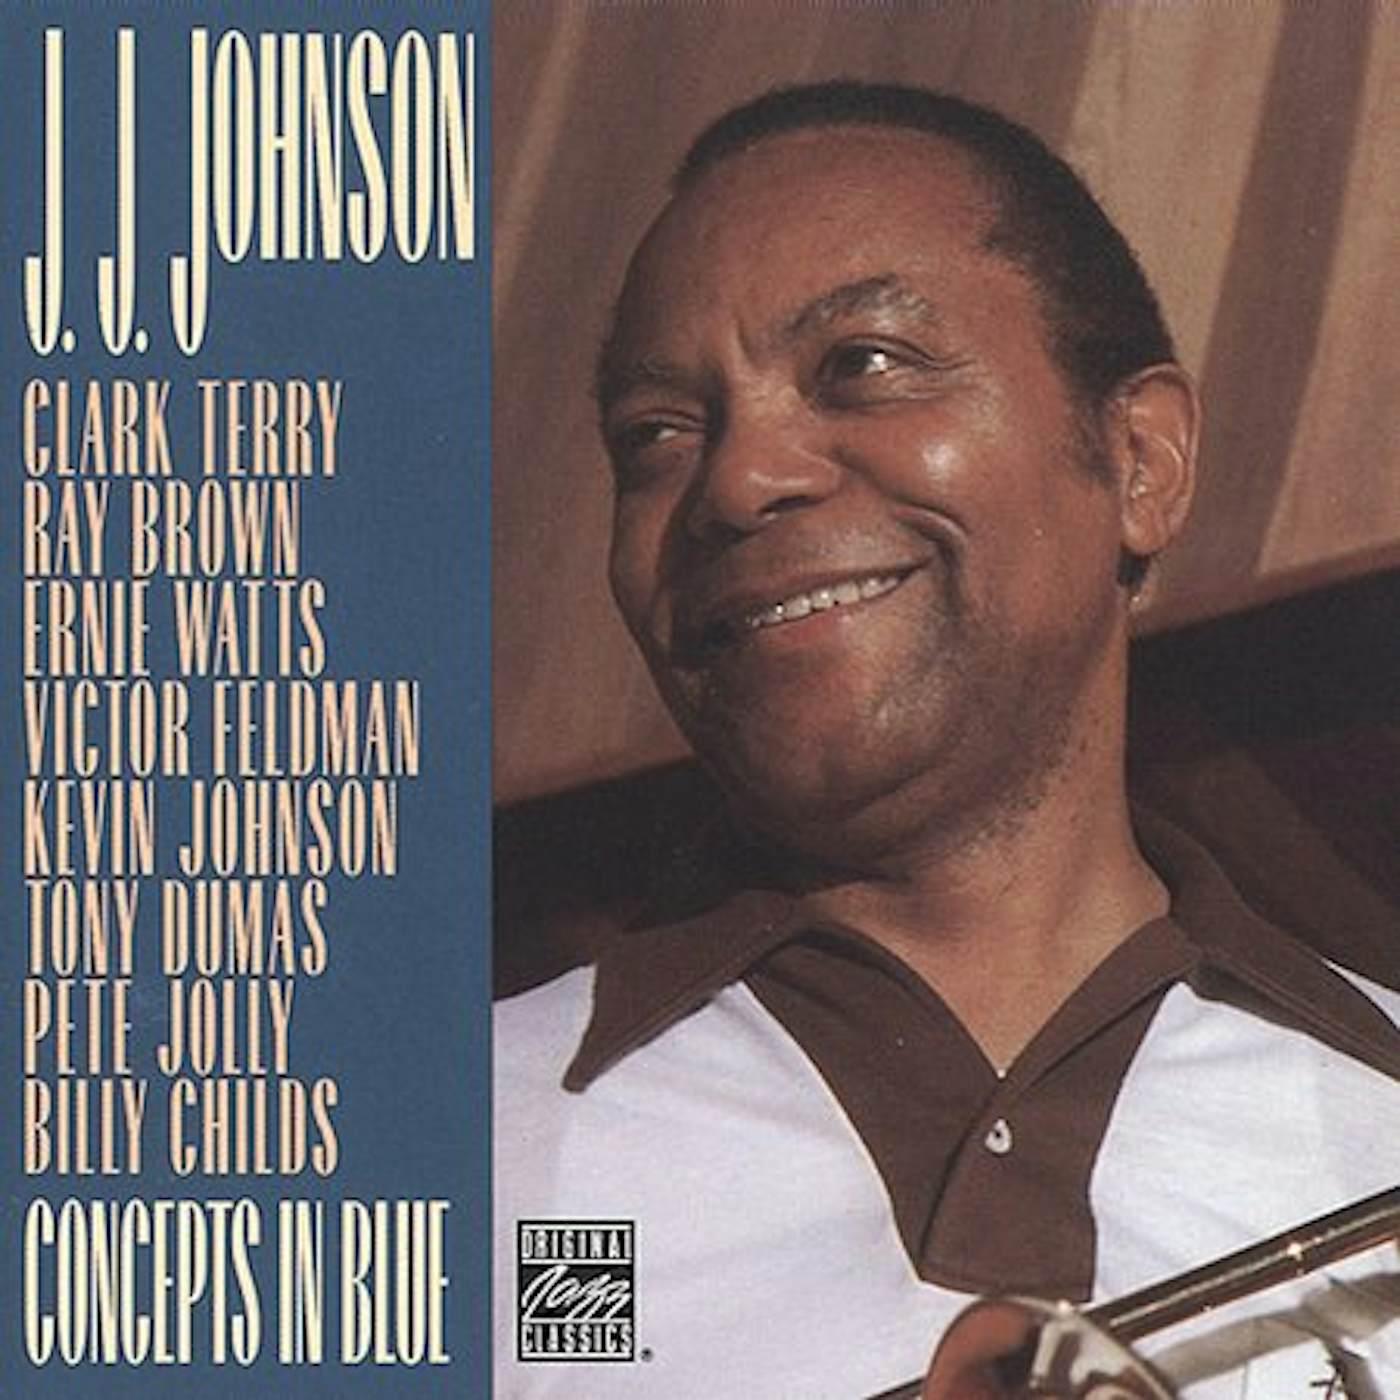 J.J. Johnson CONCEPTS IN BLUE CD